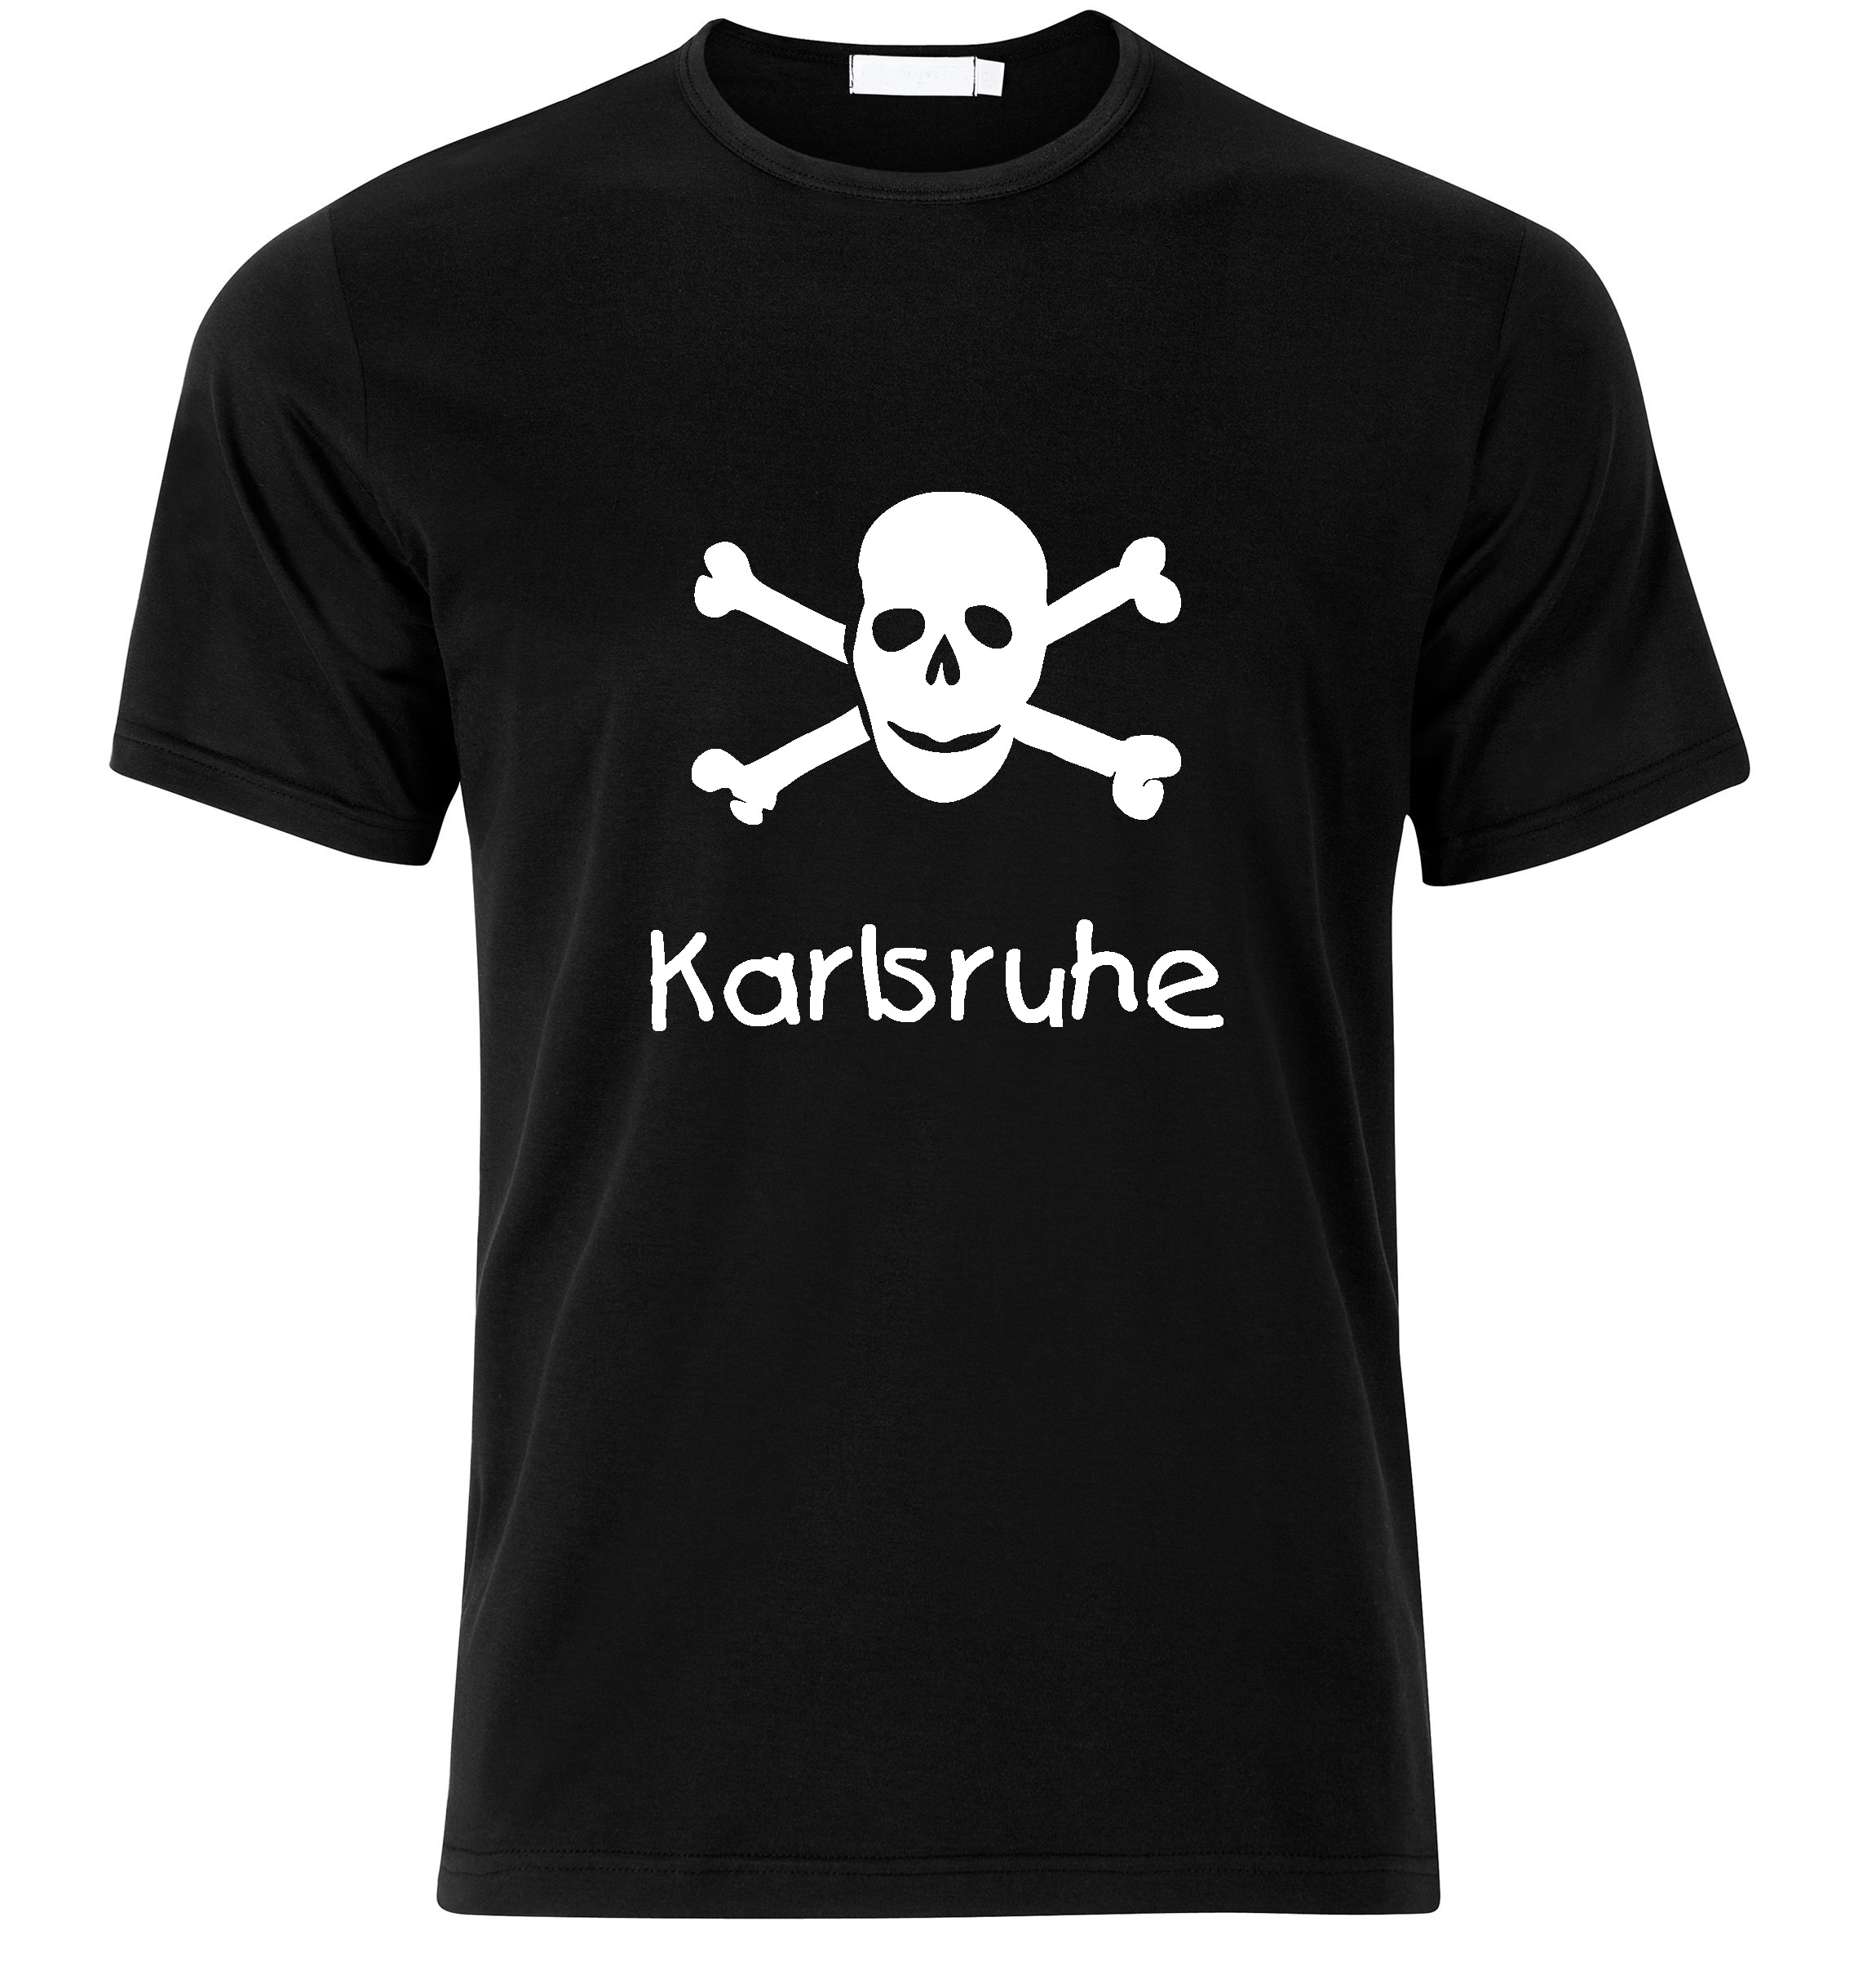 T-Shirt Karlsruhe Jolly Roger, Totenkopf